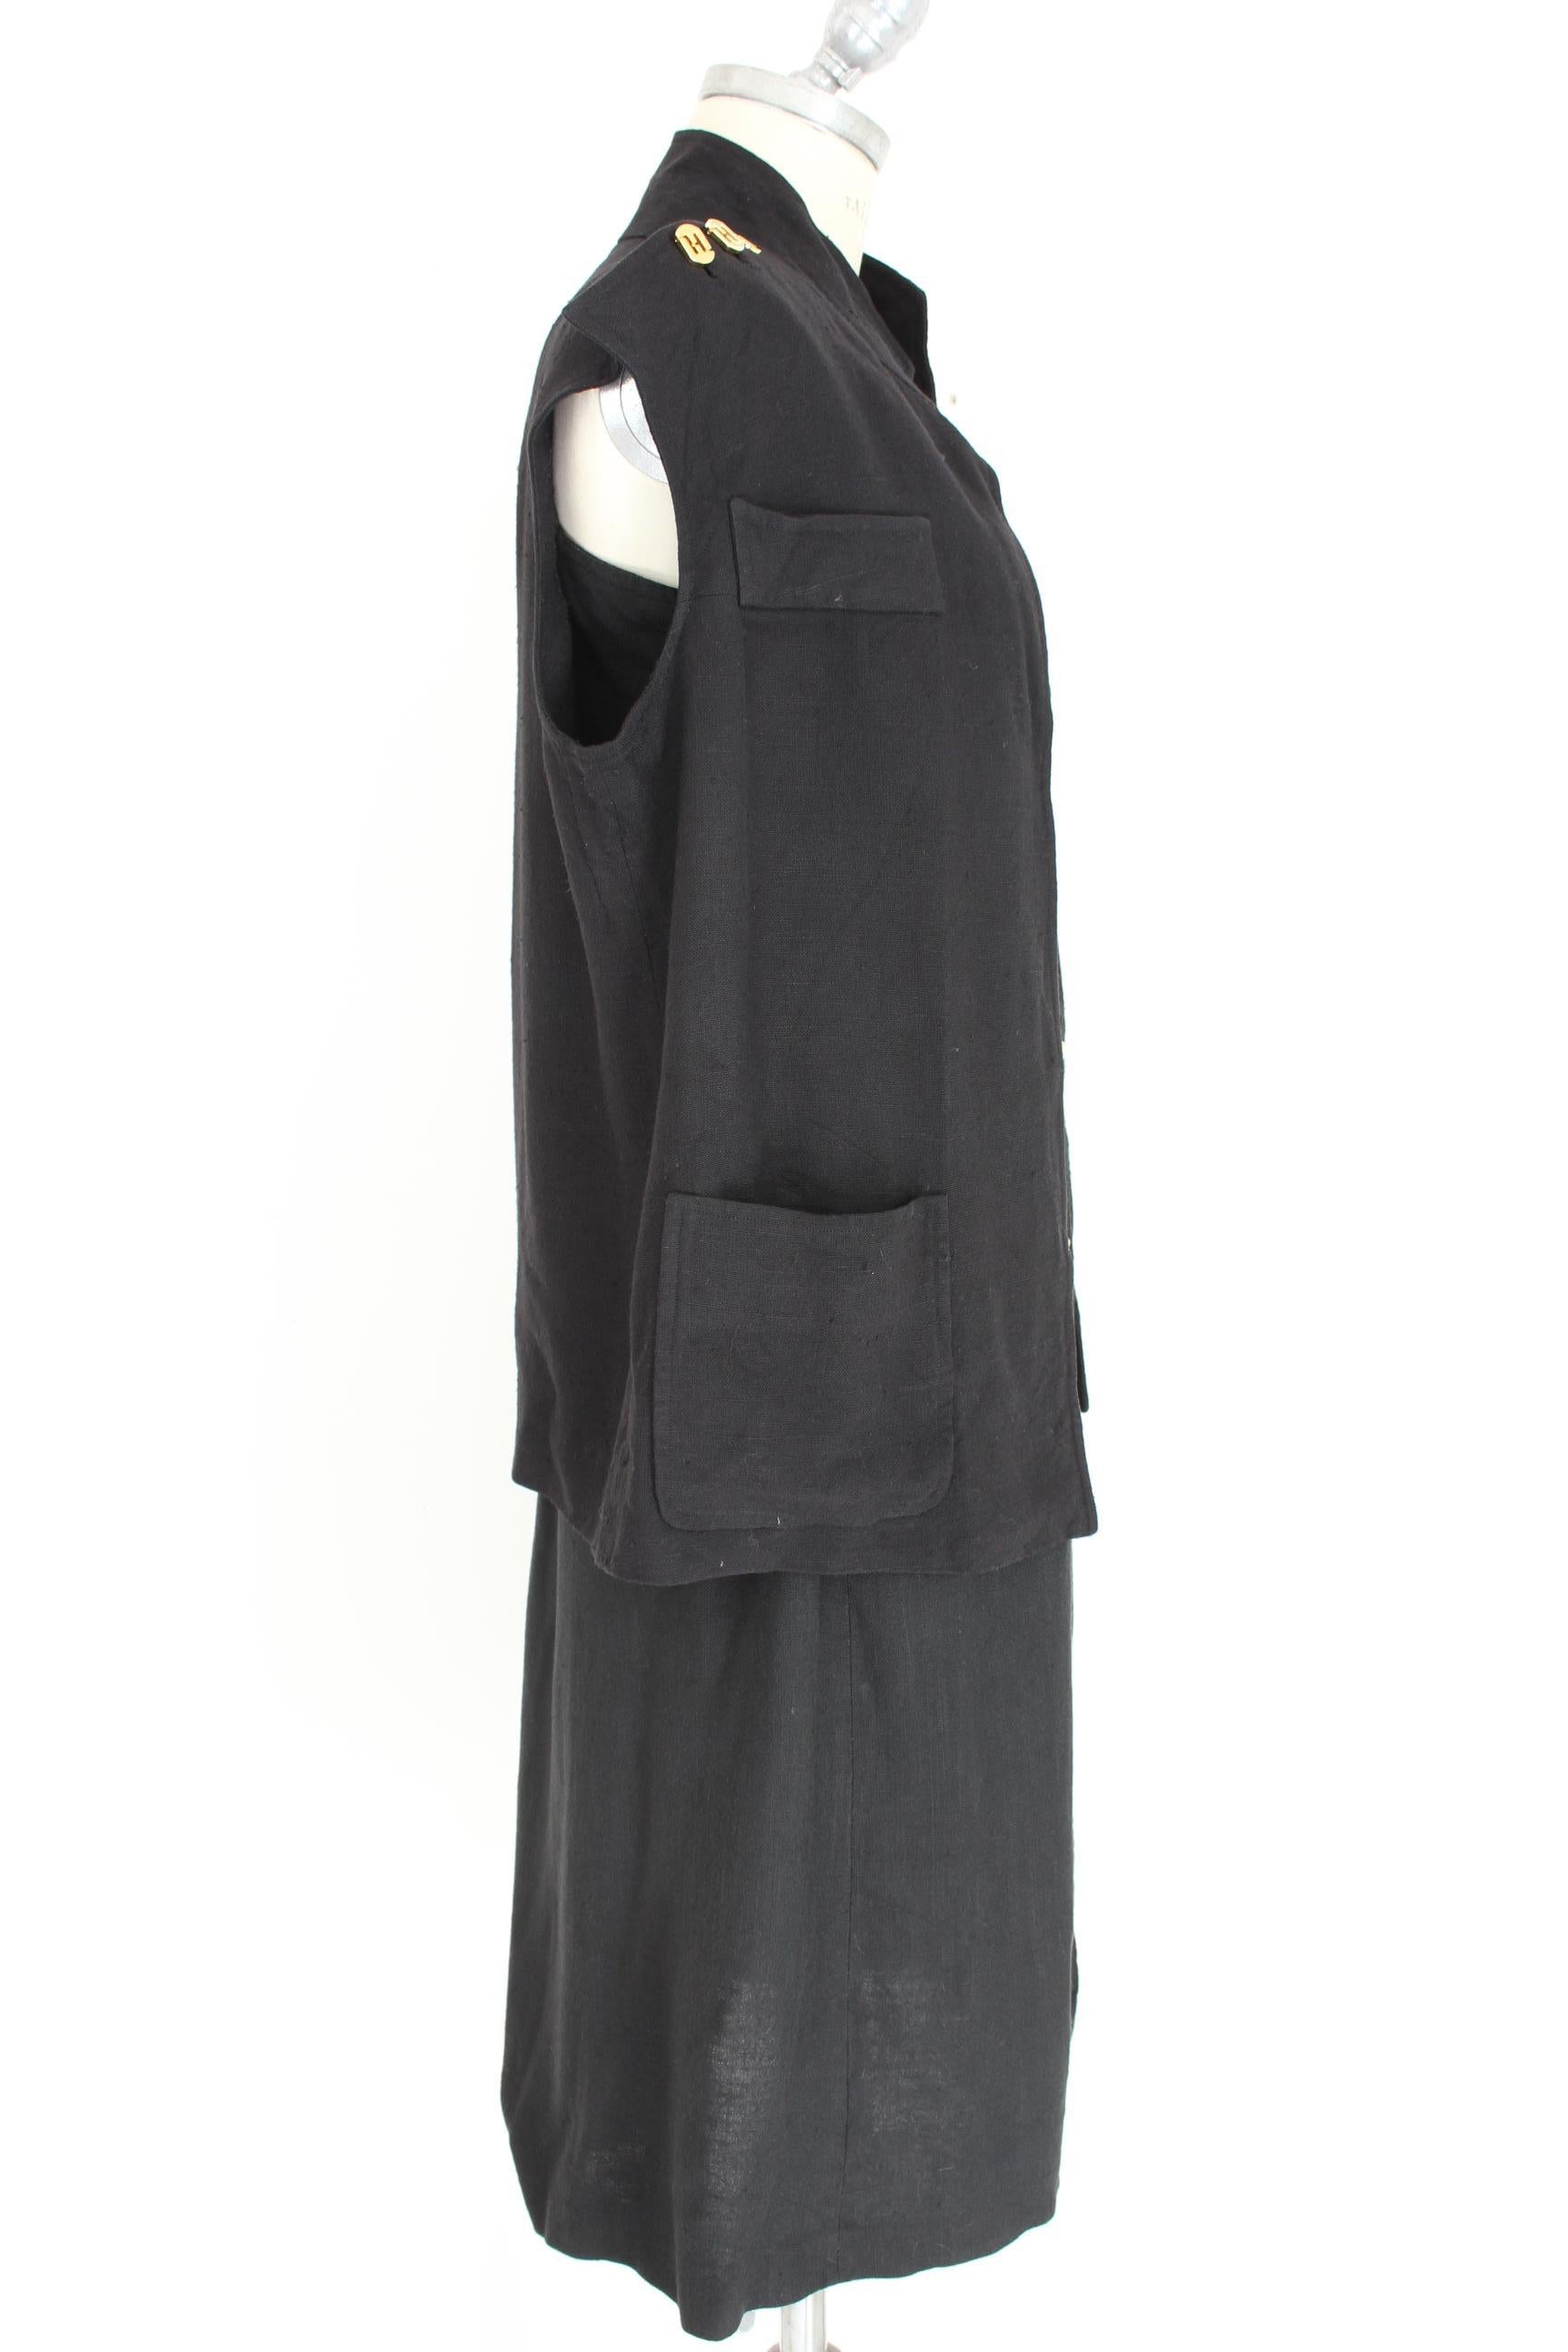 Salvatore Ferragamo Black Viscose Long Cocktail Suit Dress 1990s In Excellent Condition For Sale In Brindisi, Bt